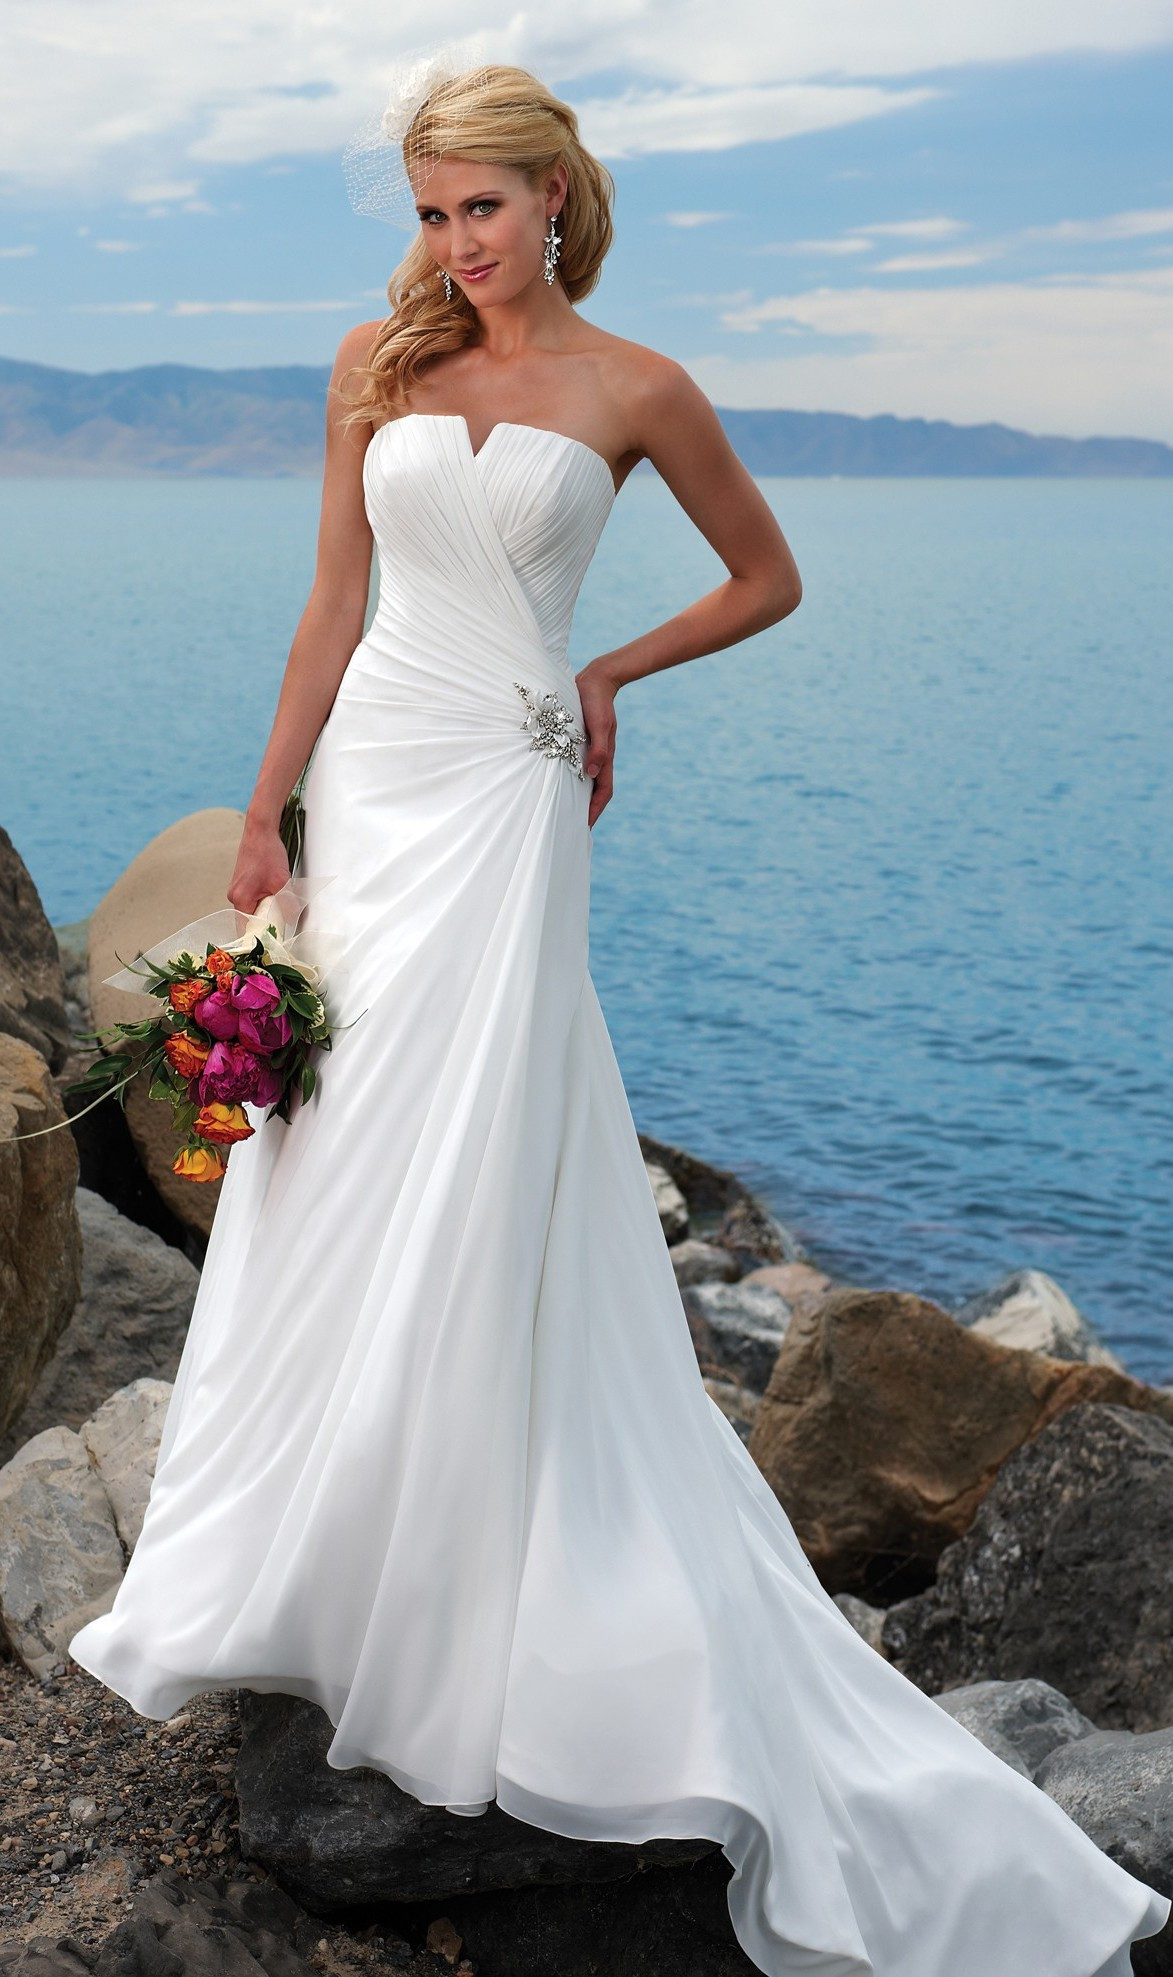 Strapless Beach Wedding Dresses
 20 Superb Strapless Wedding Dresses Ideas Wohh Wedding